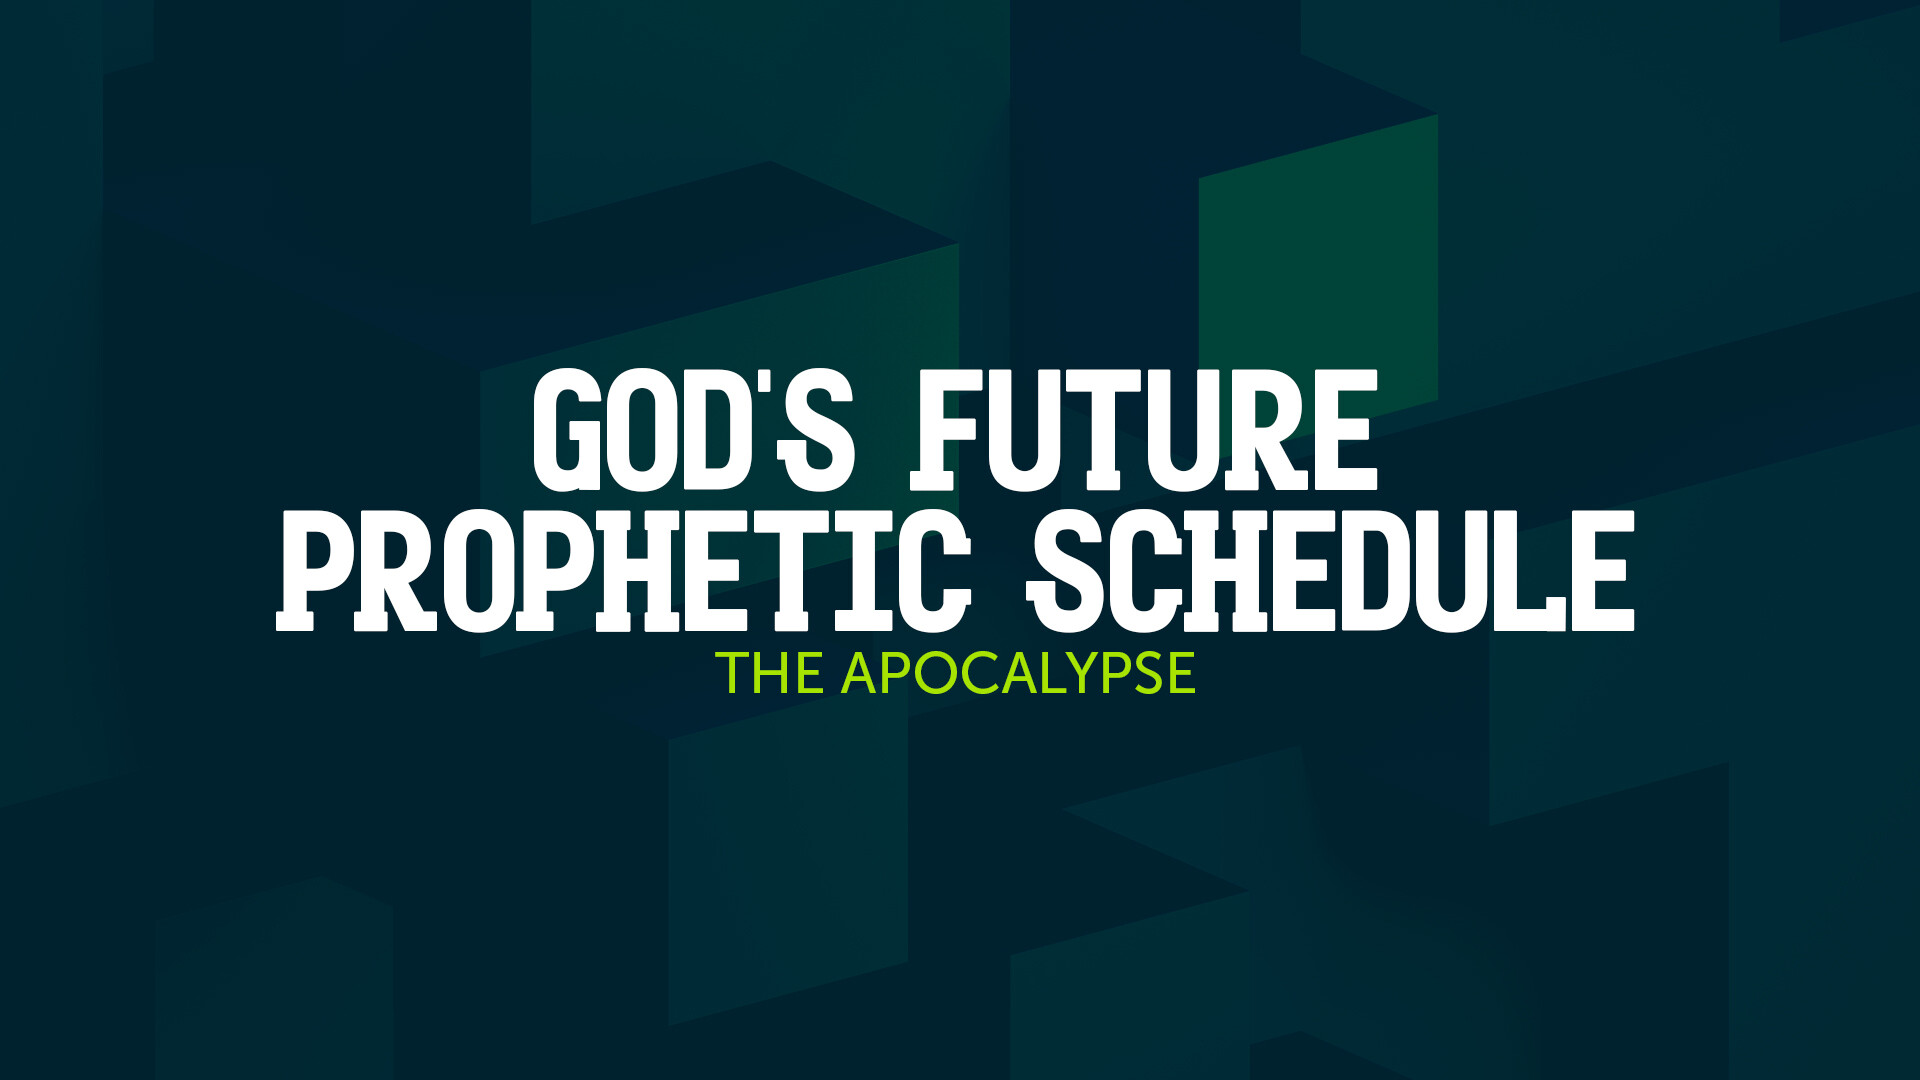 God's Future Prophetic Schedule - The Apocalypse